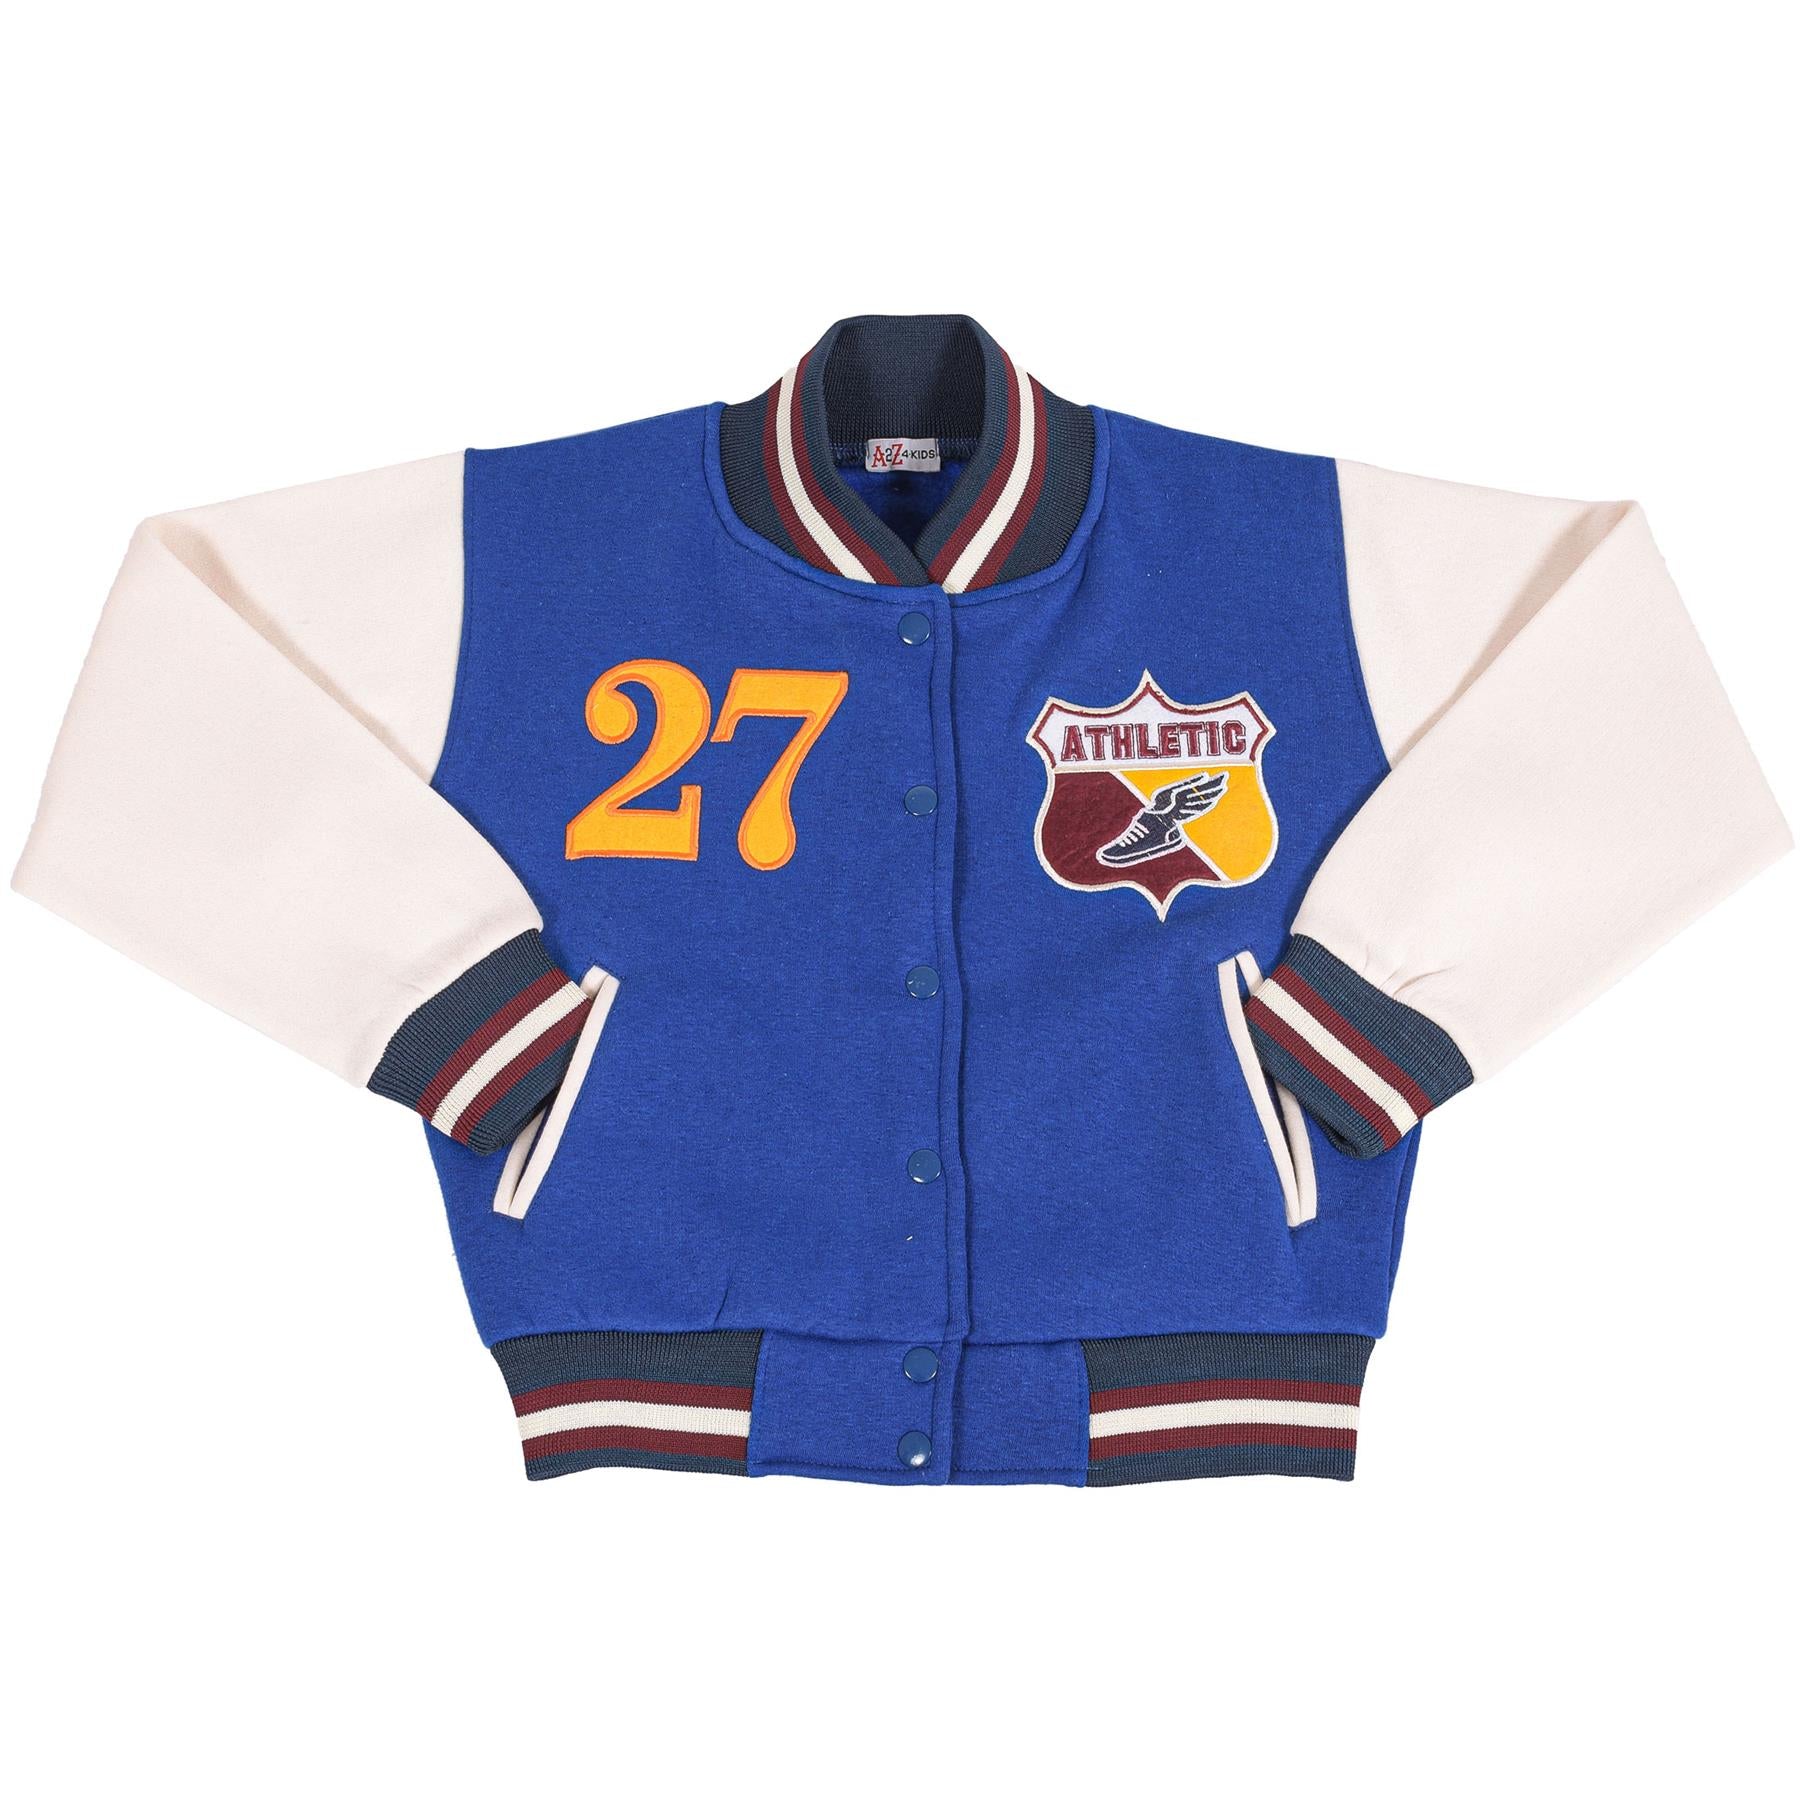 Kids Girls Boys Baseball Jacket Varsity Style Athletic Embroidered School Jacket